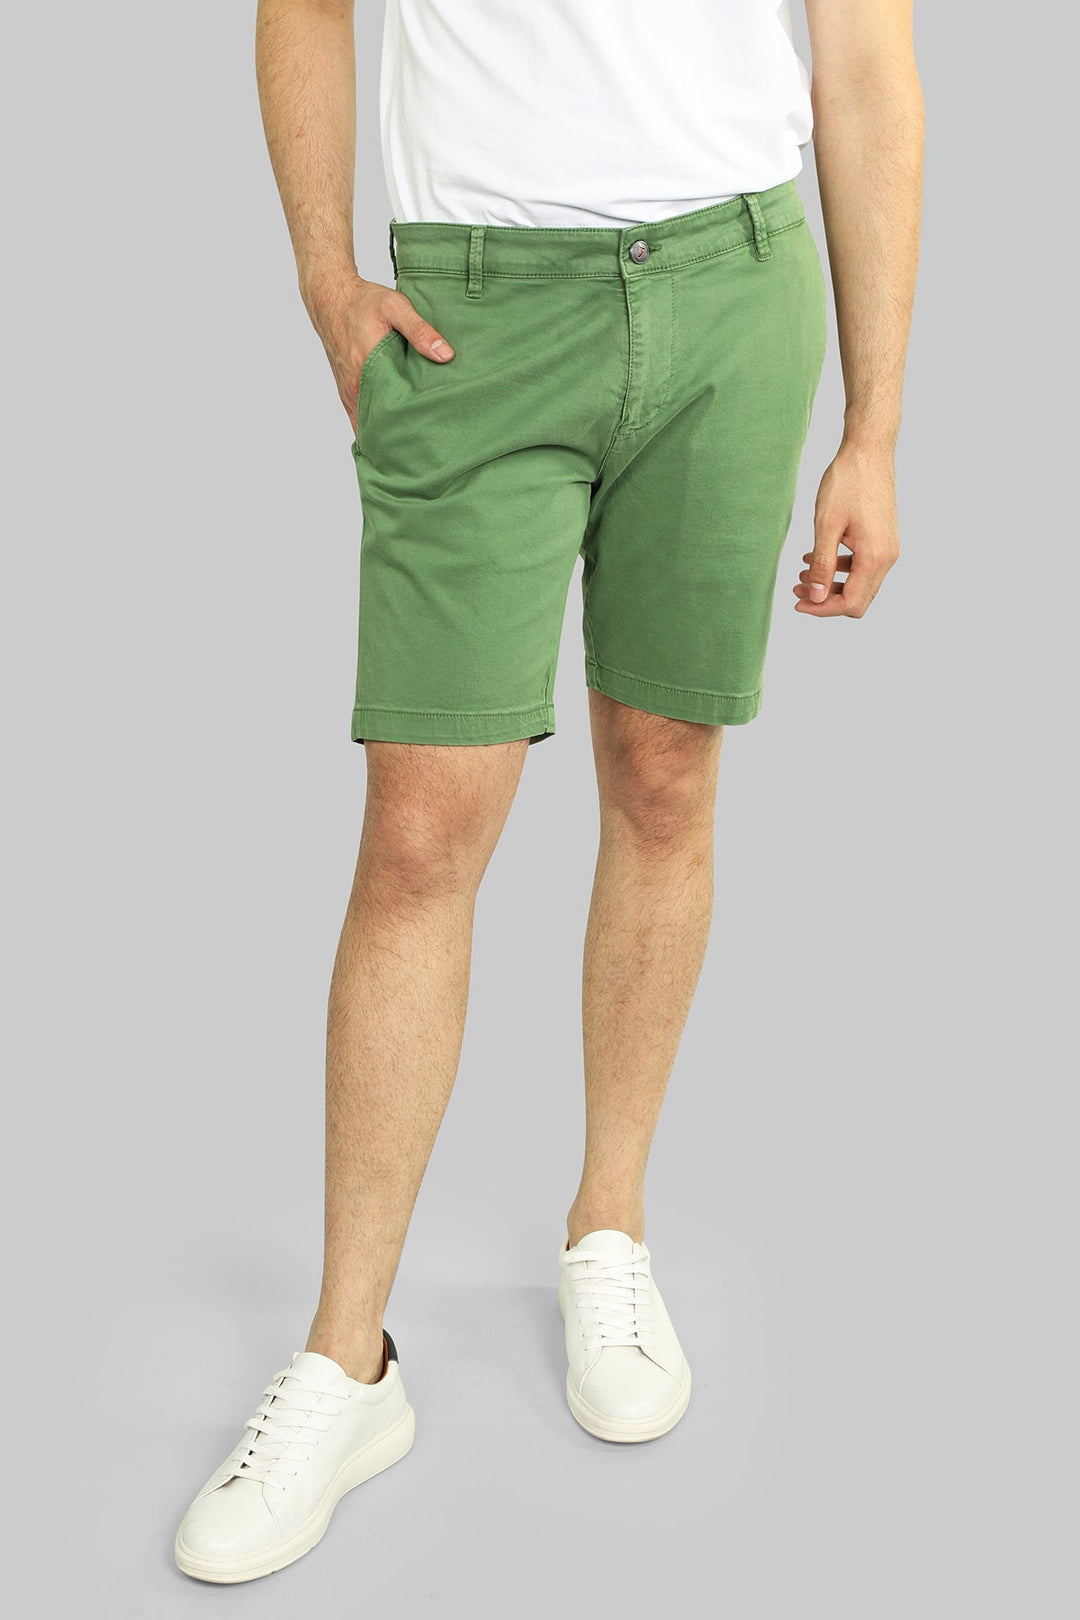 Green Shorts - 7 Downie St.®